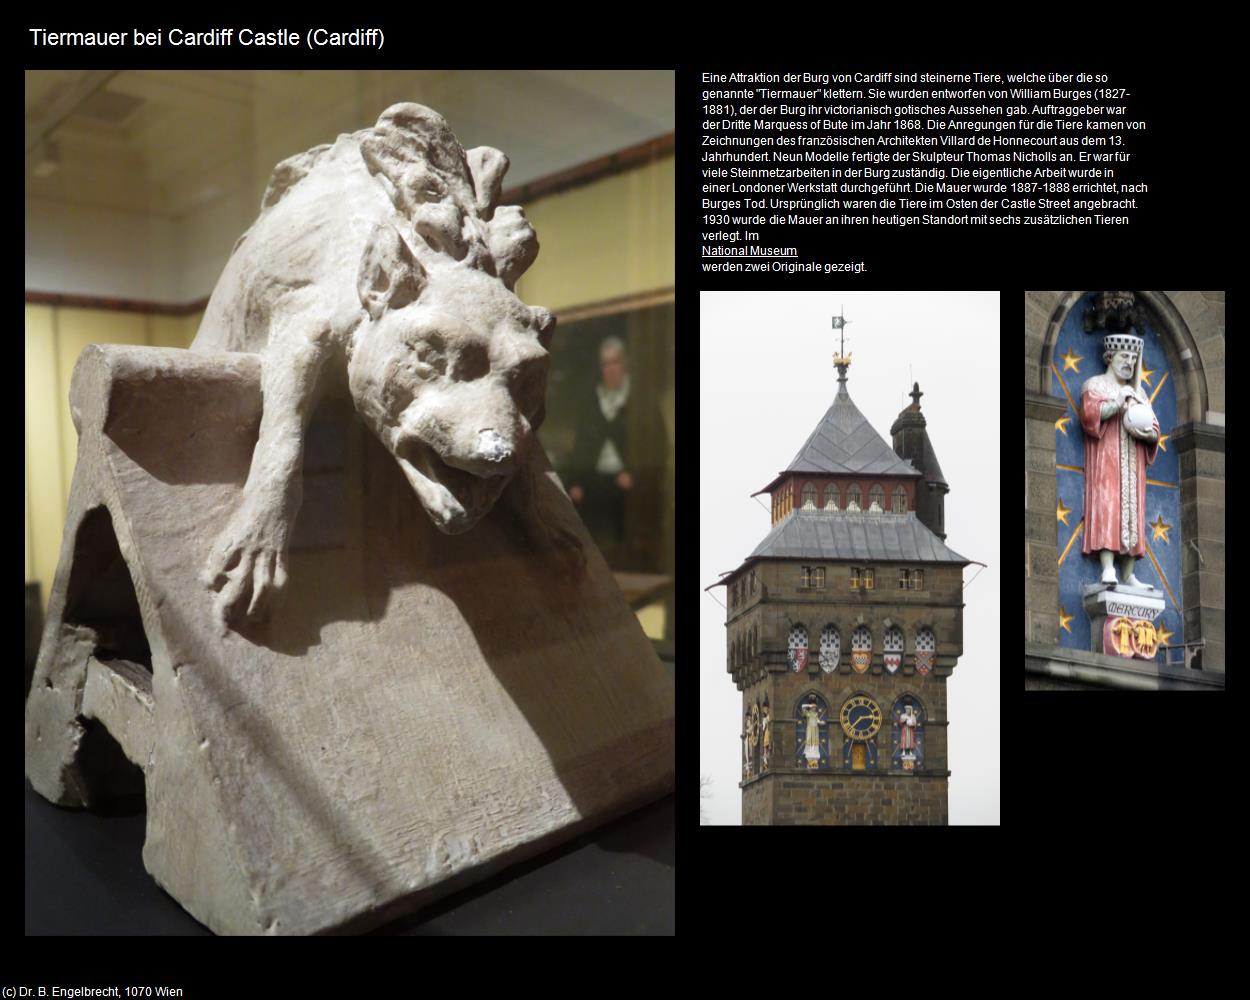 Tiermauer bei Cardiff Castle  (Cardiff, Wales) in Kulturatlas-ENGLAND und WALES(c)B.Engelbrecht